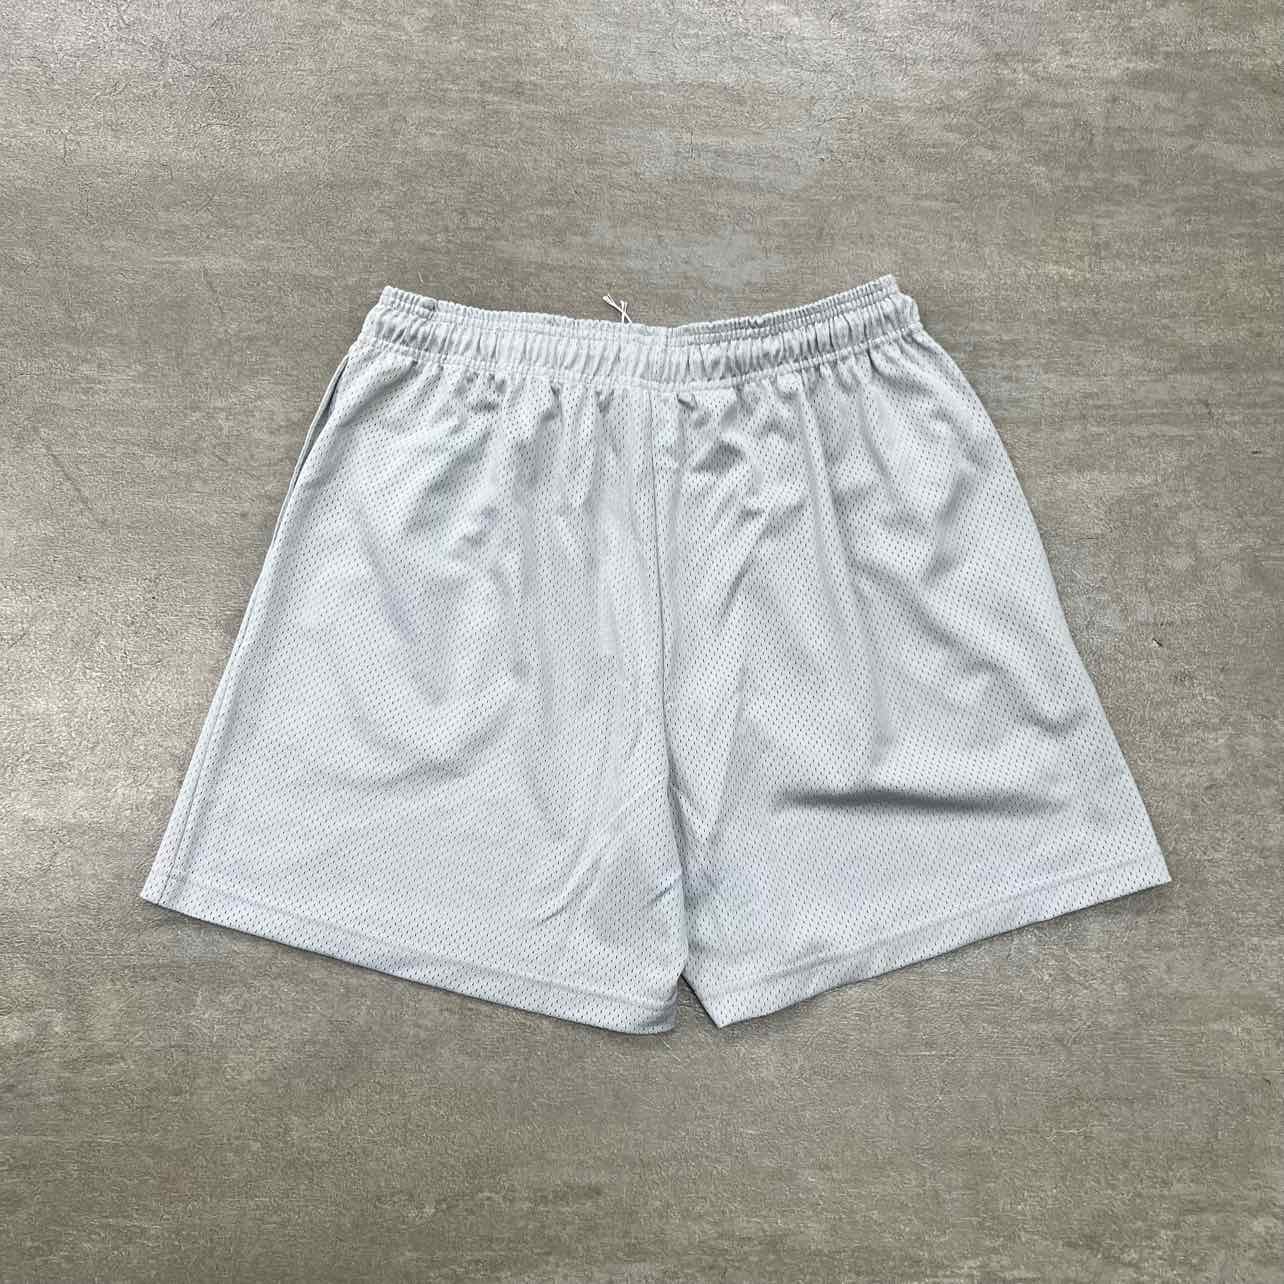 Eric Emanuel Mesh Shorts "GREY" Black New Size XL